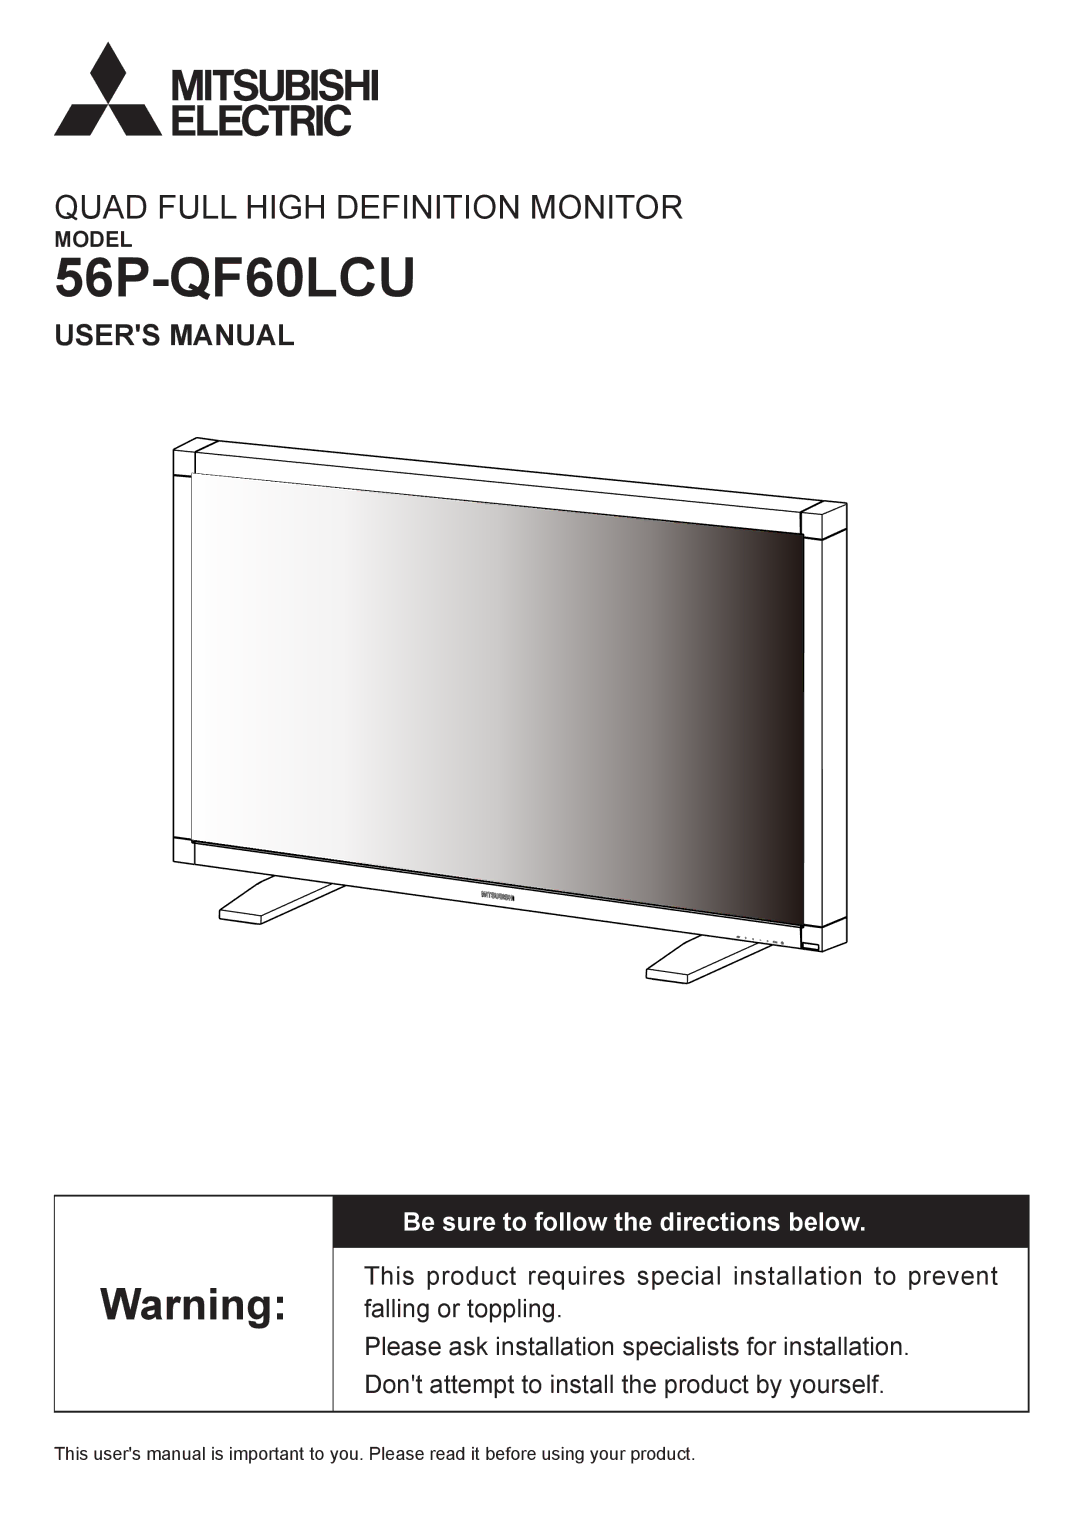 Mitsubishi Electronics 56P-QF60LCU user manual 